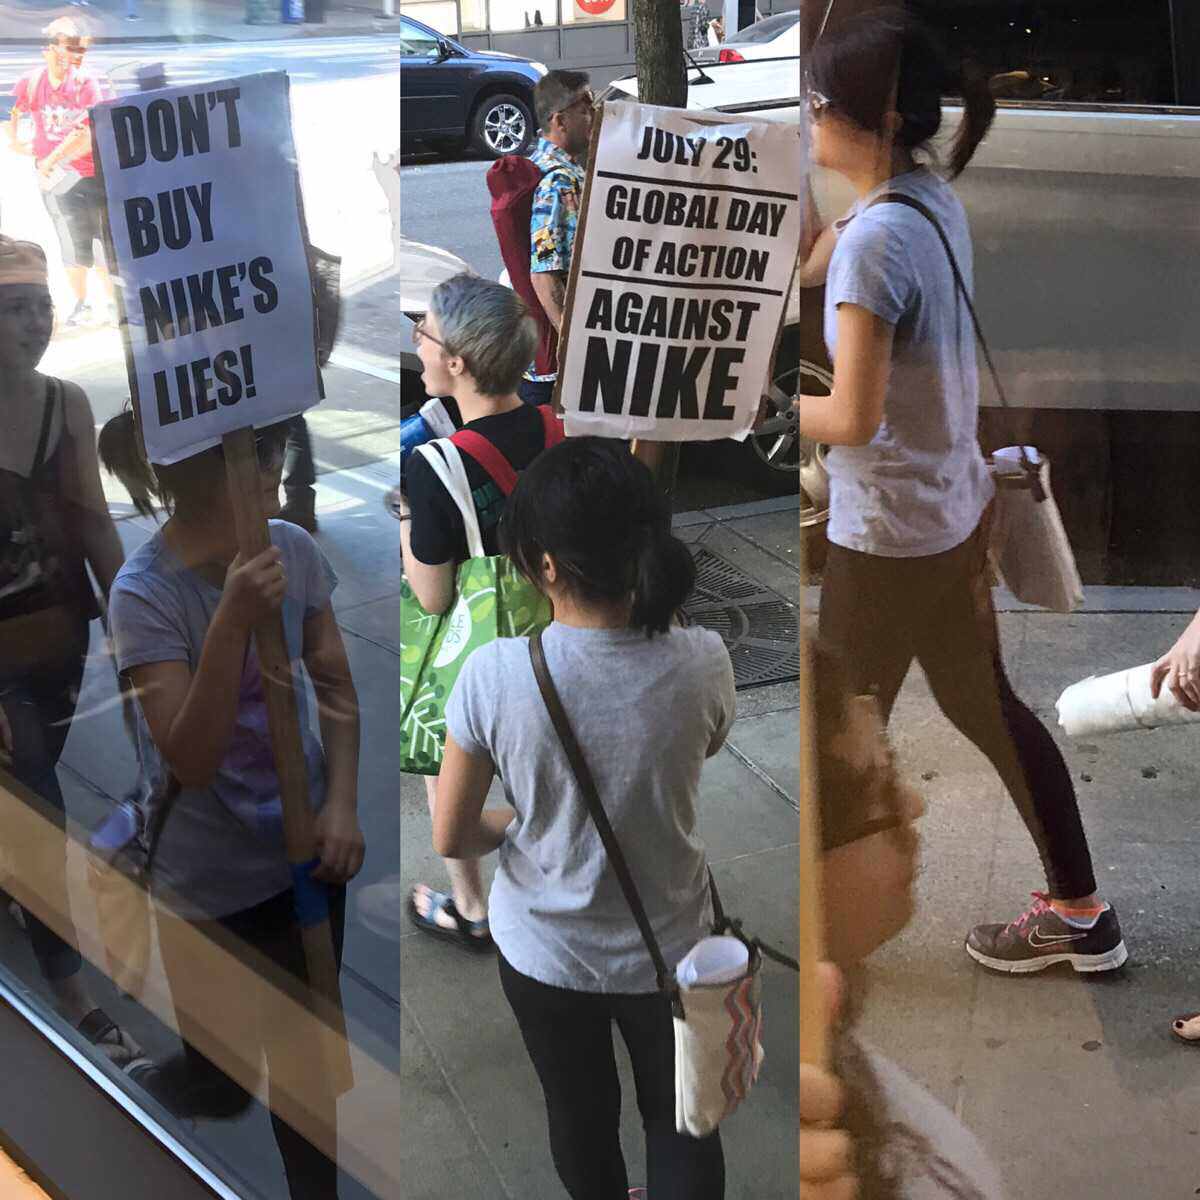 Don't buy Nike's ... against Nike. (^-^)